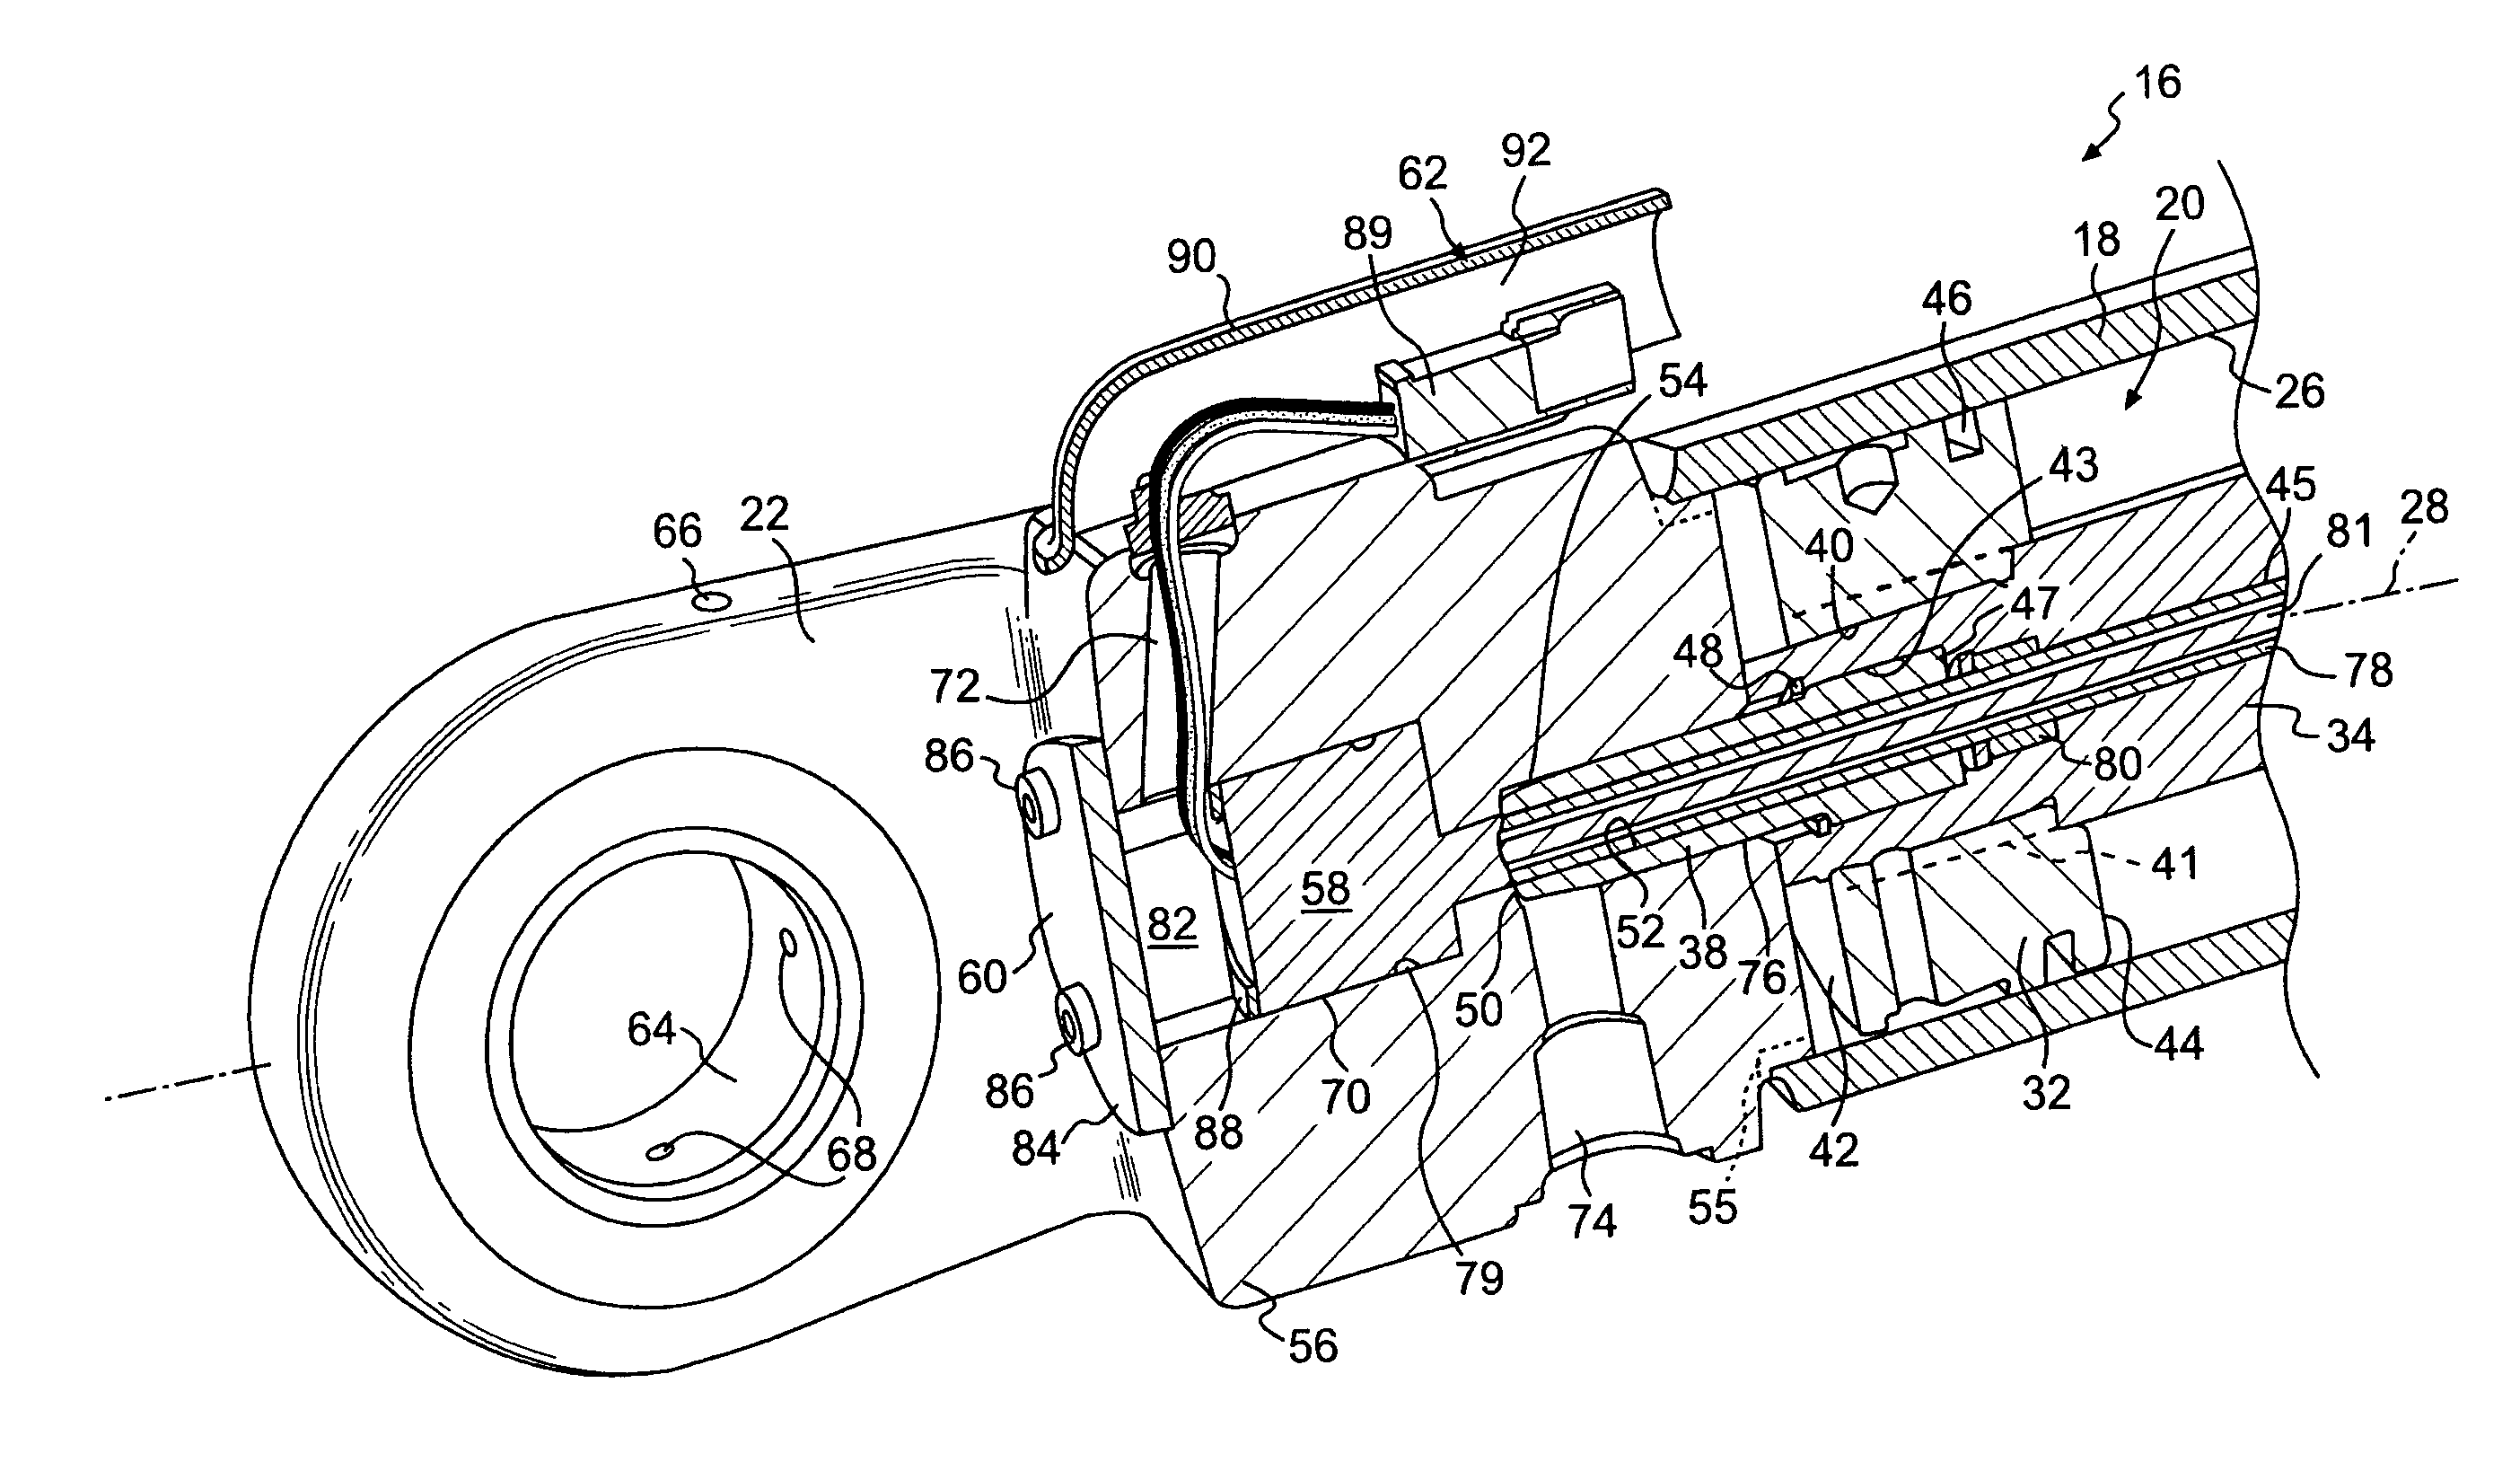 Hydraulic cylinder having a snubbing valve